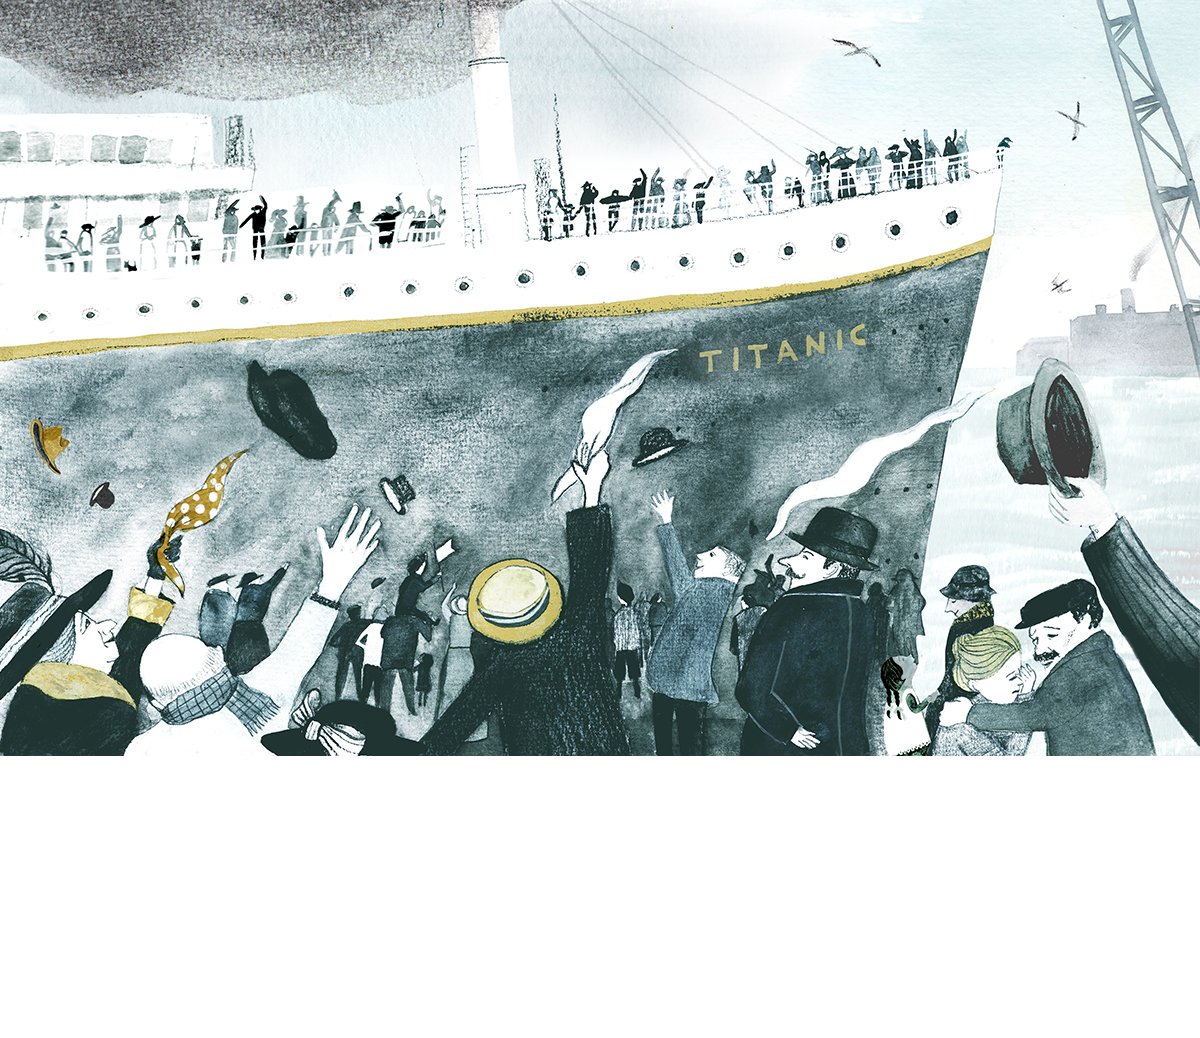 gill-smith-titanic-crowds-illustration.jpg